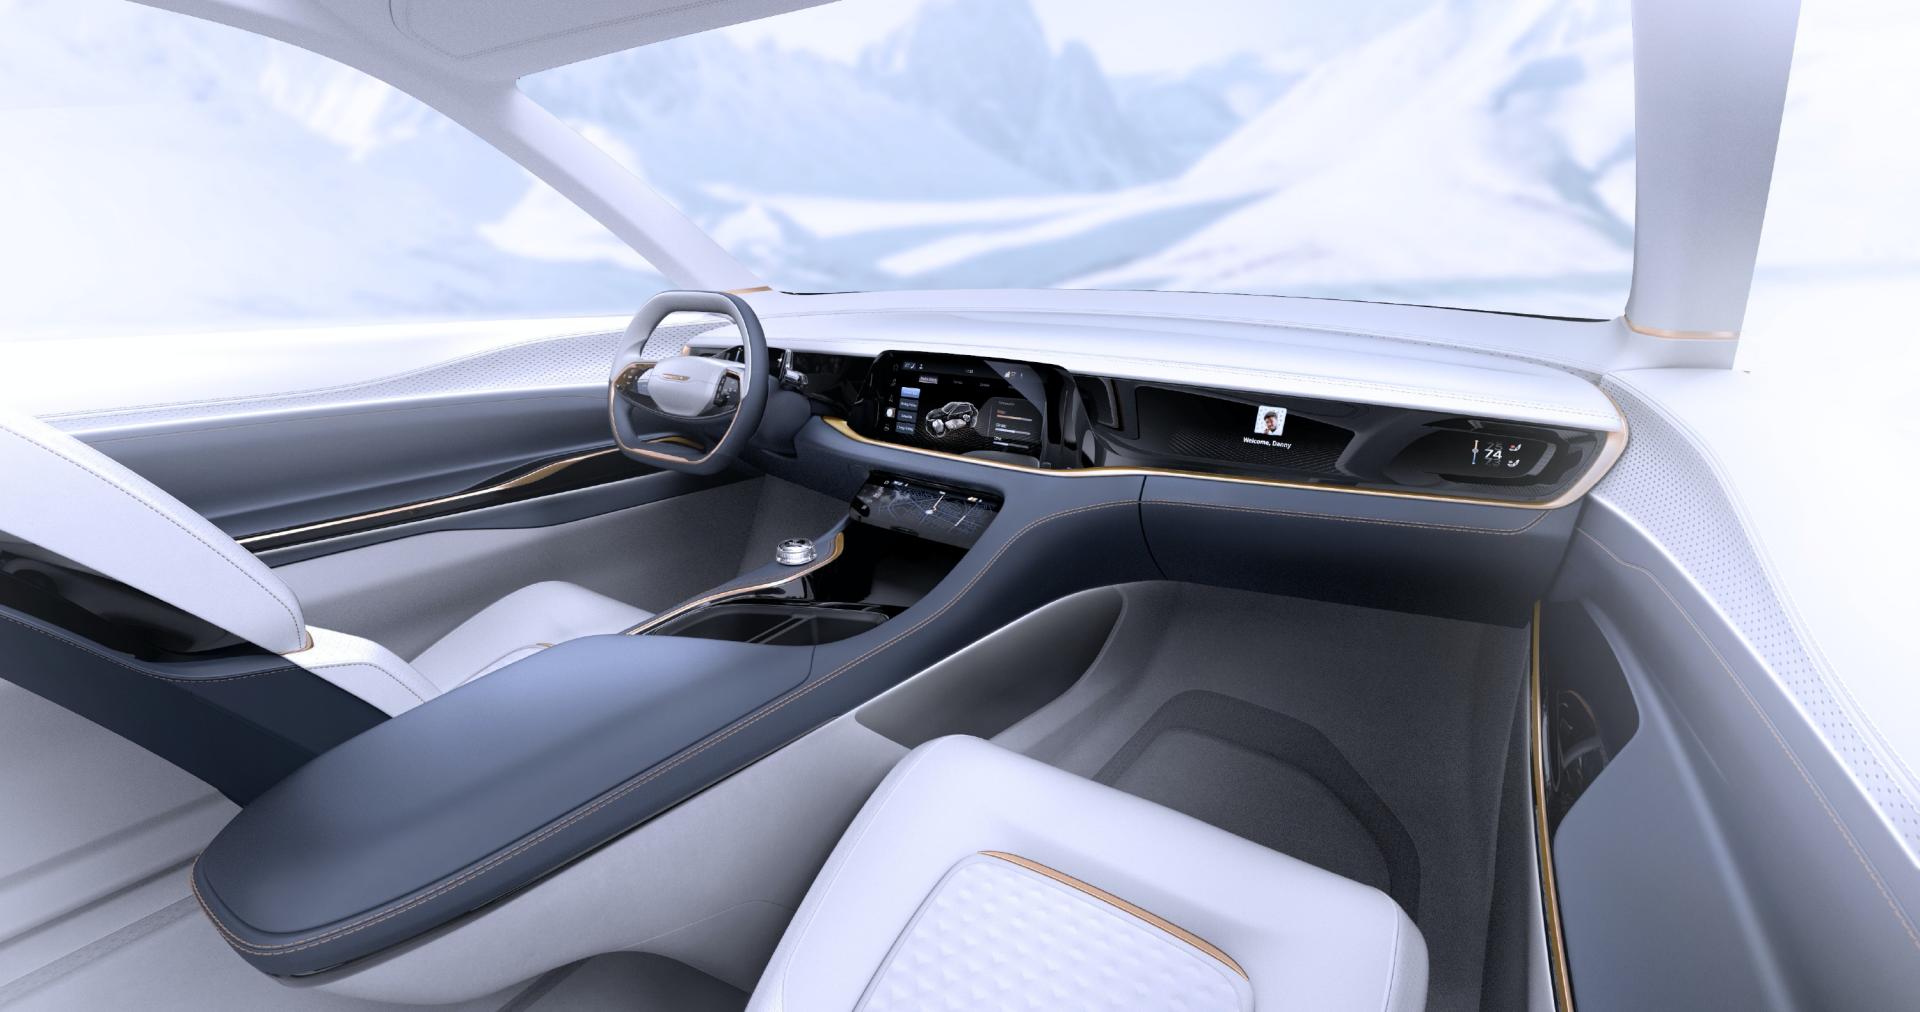 2020-Chrysler-Airflow-Vision-concept-4.jpeg